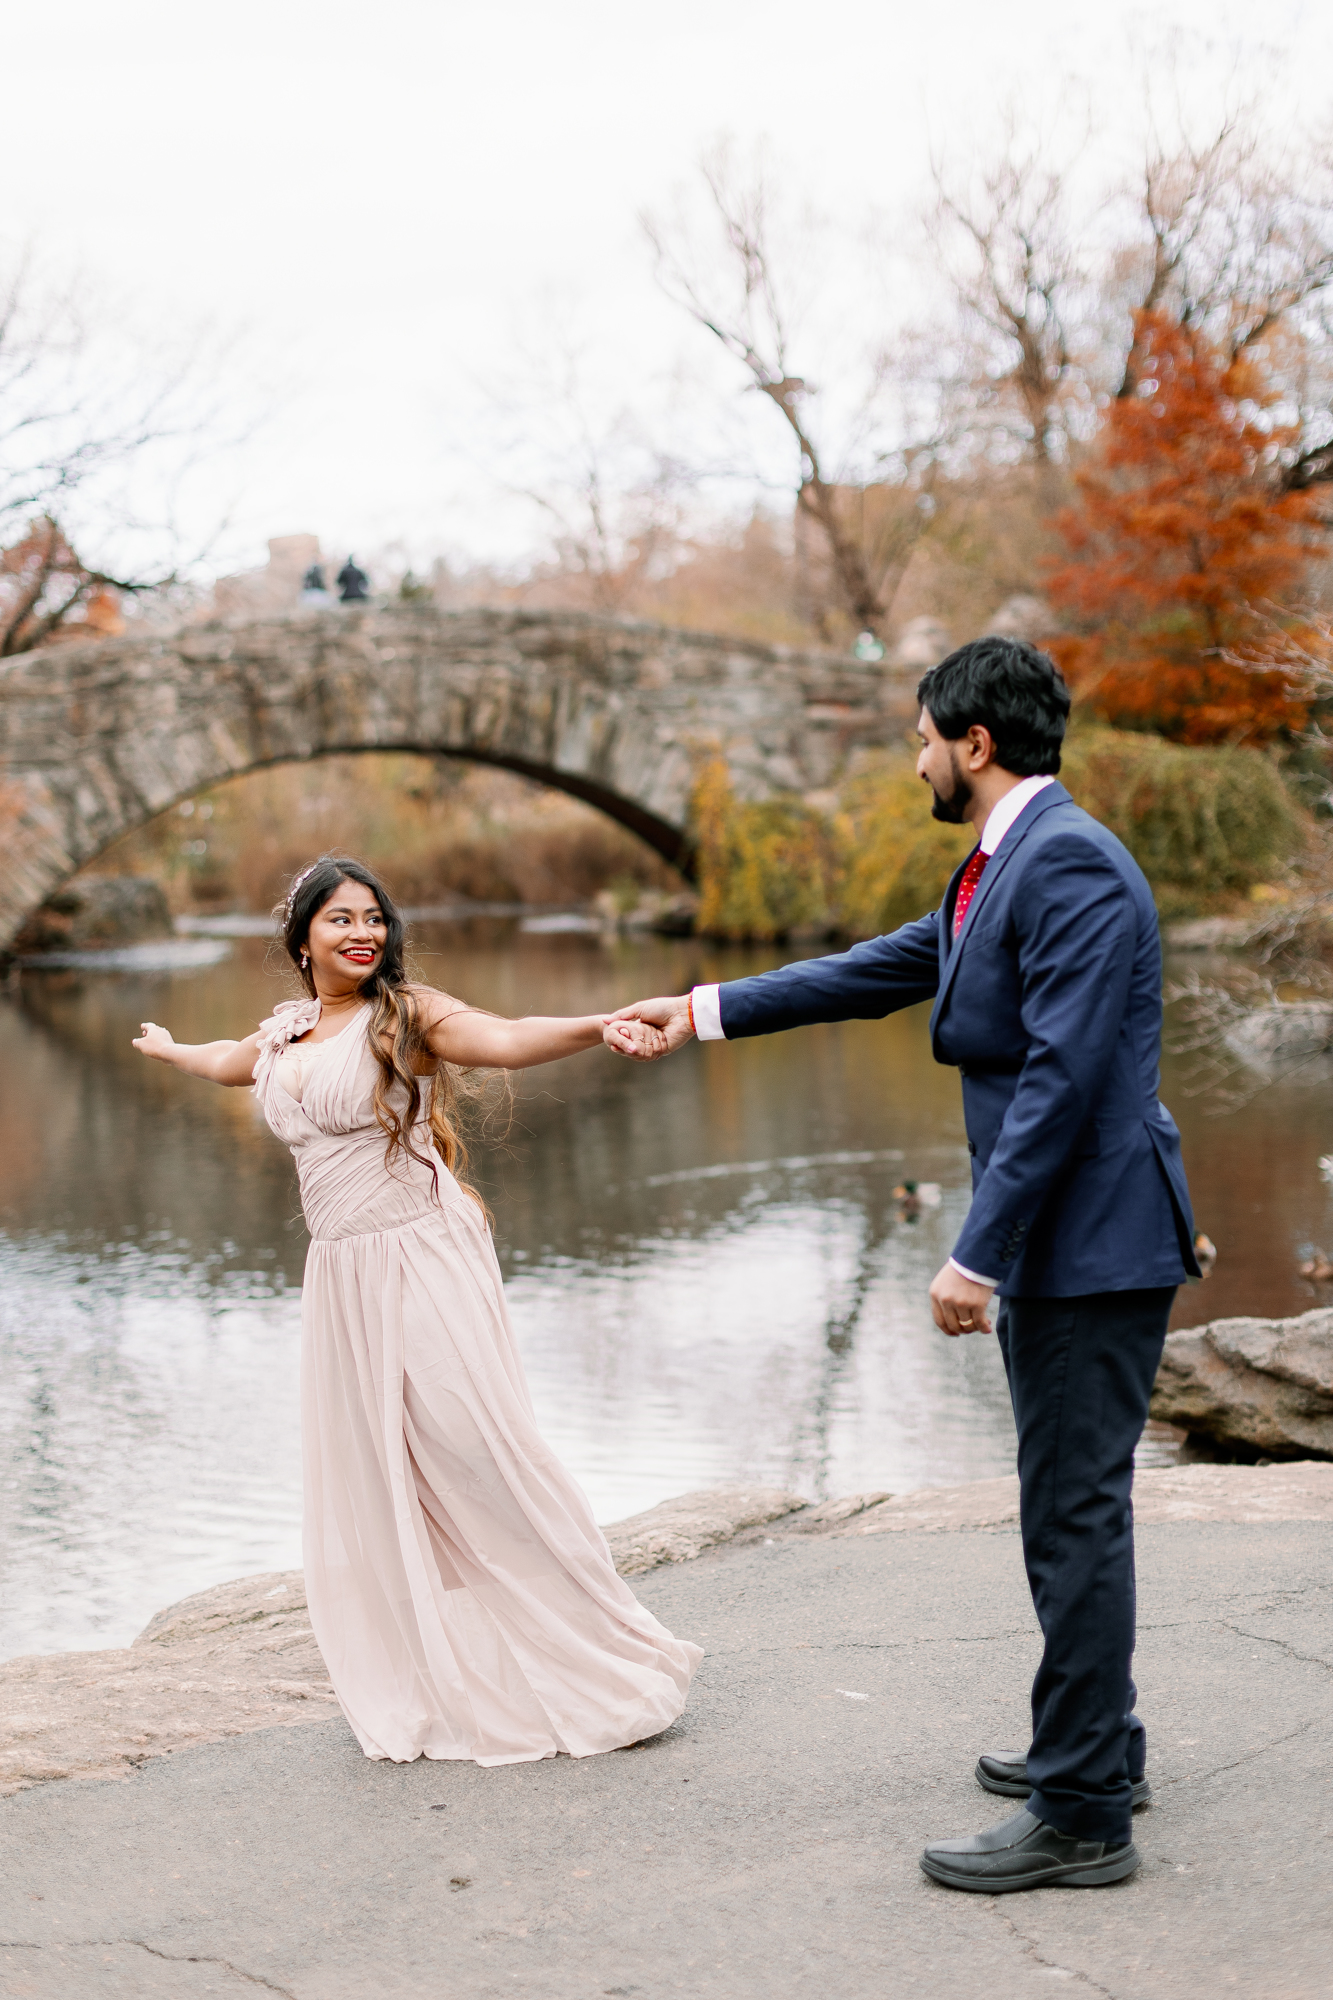 Beautiful Central Park elopement locations